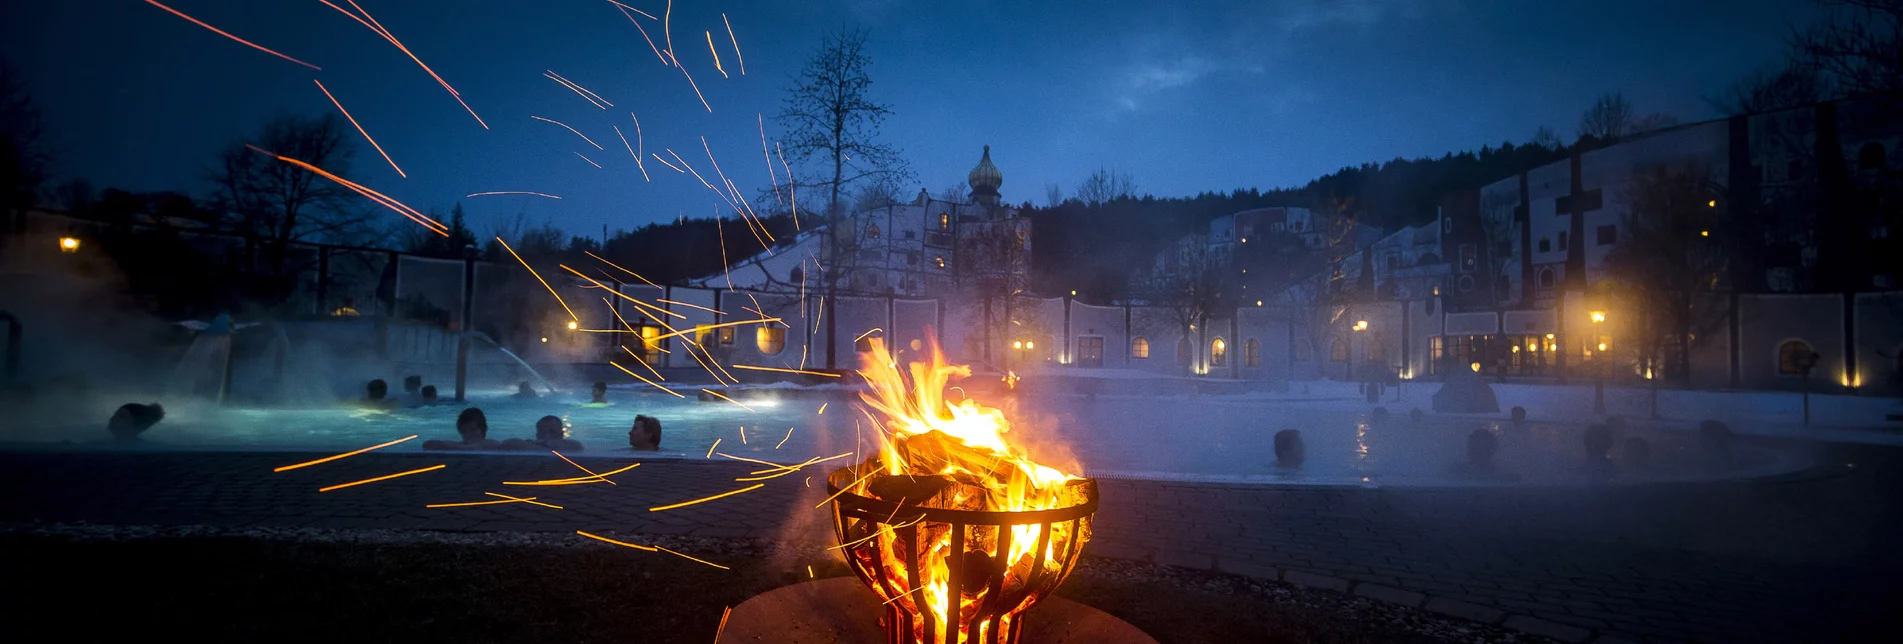 Winter wellness at Rogner Bad Blumau | © Steiermark Tourismus | Tom Lamm